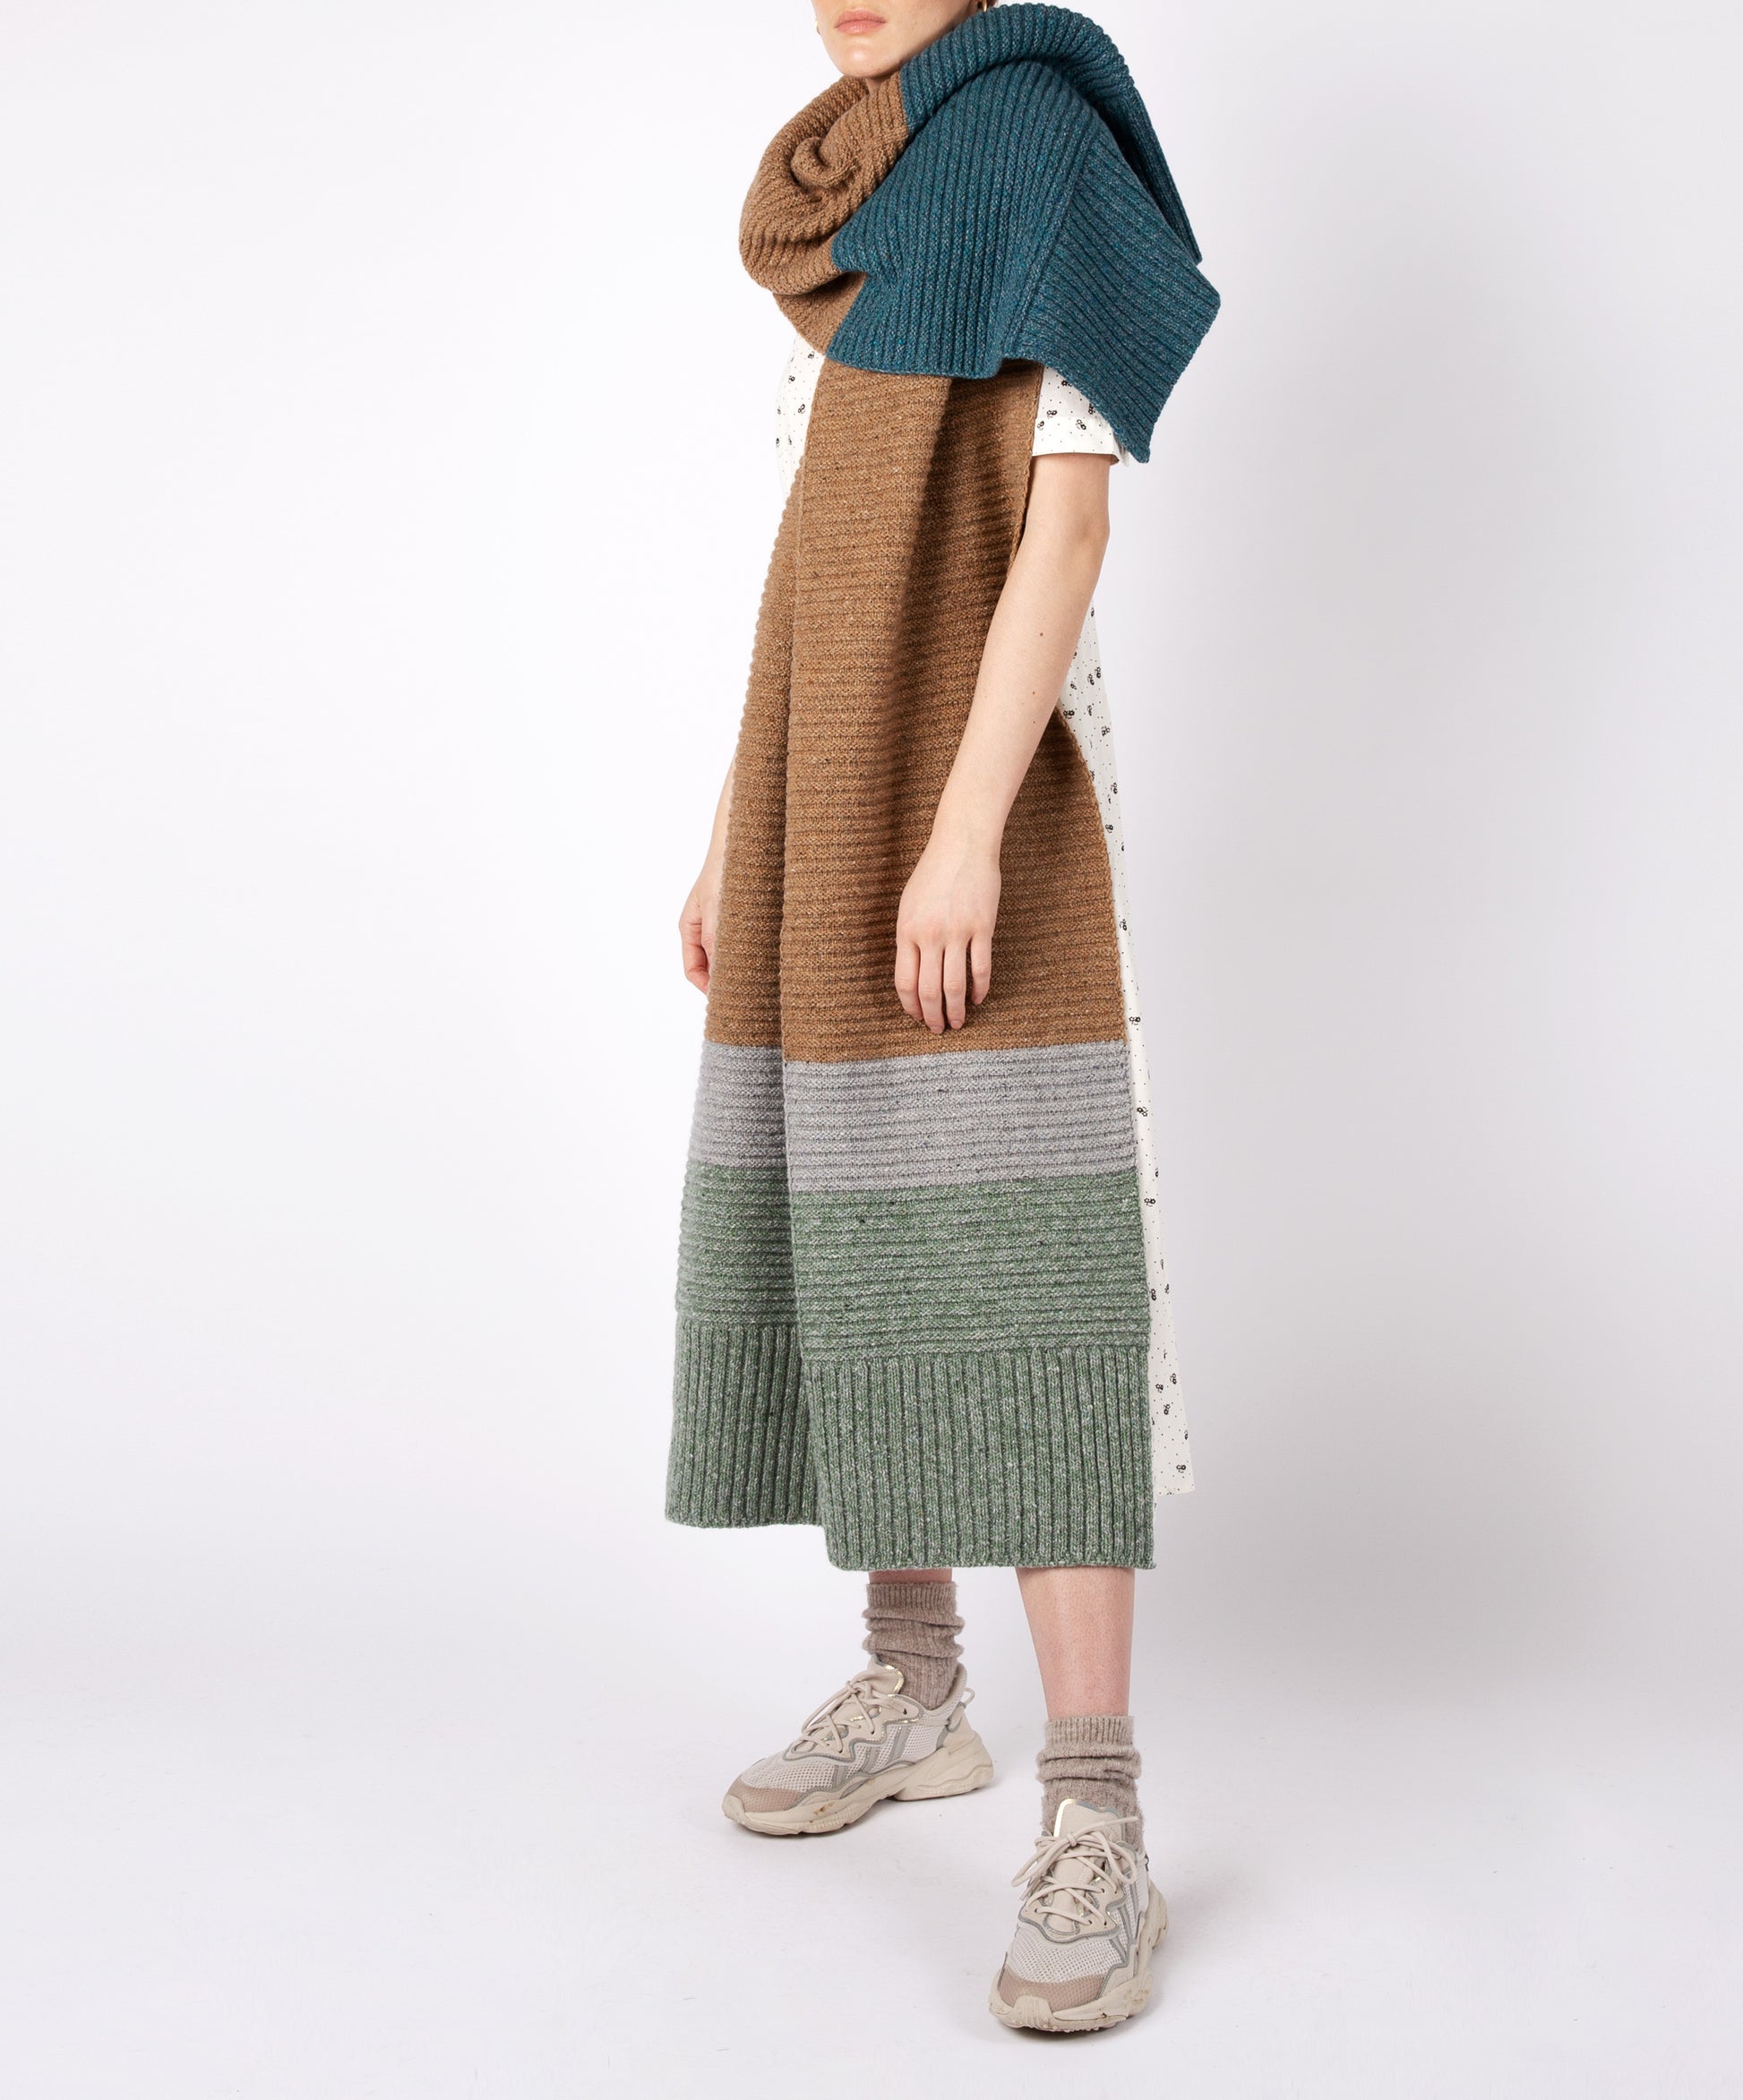 IrelandsEye Knitwear Knitted 'Elder' Contrast Panel Wrap Aquamarine Biscuit